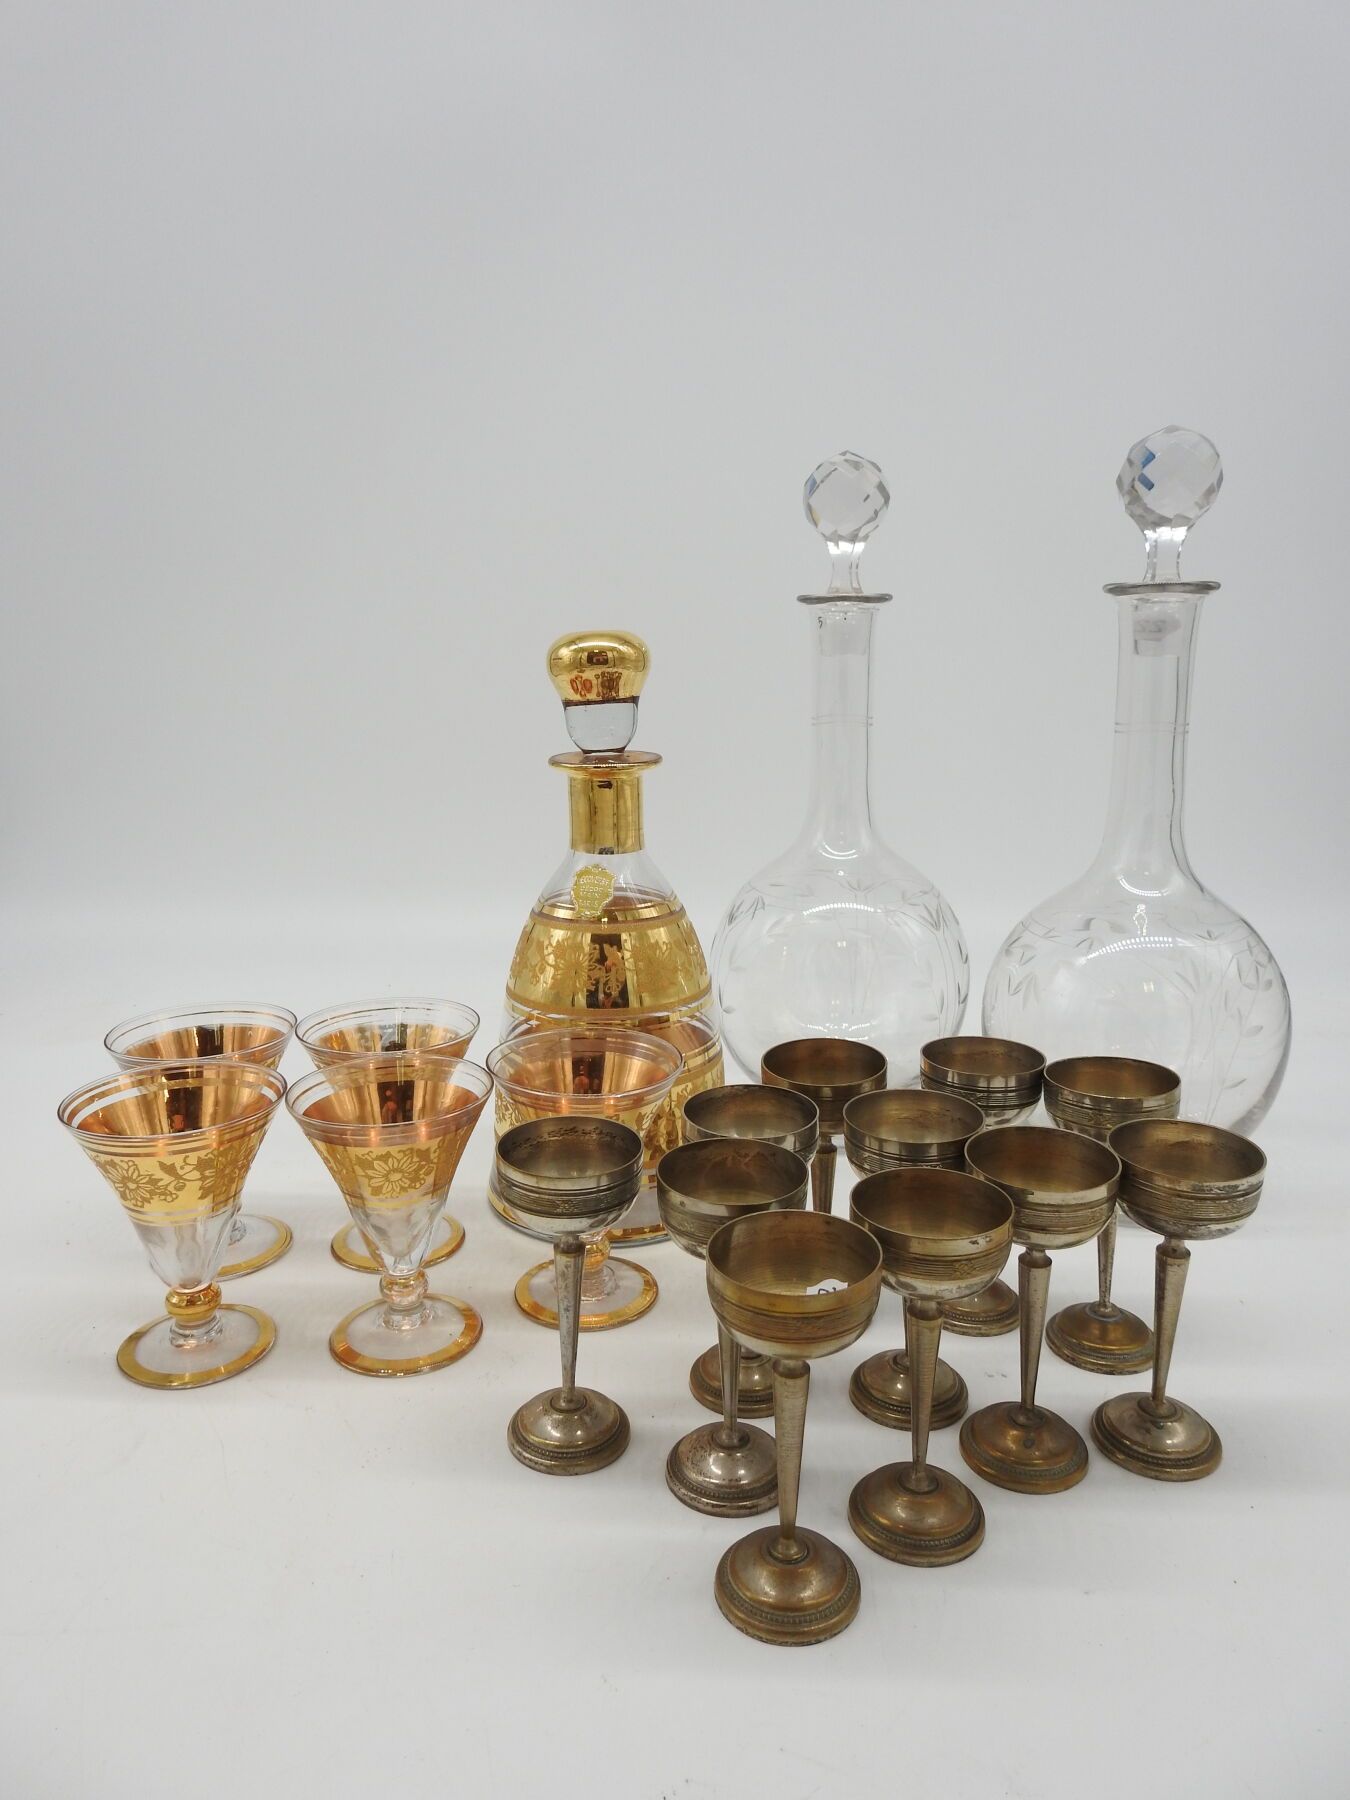 Null 装饰品：玻璃和镀金酒具：一个酒壶和五个杯子

加入一对刻有树叶的玻璃酒壶

和11个烈酒杯的金属底座